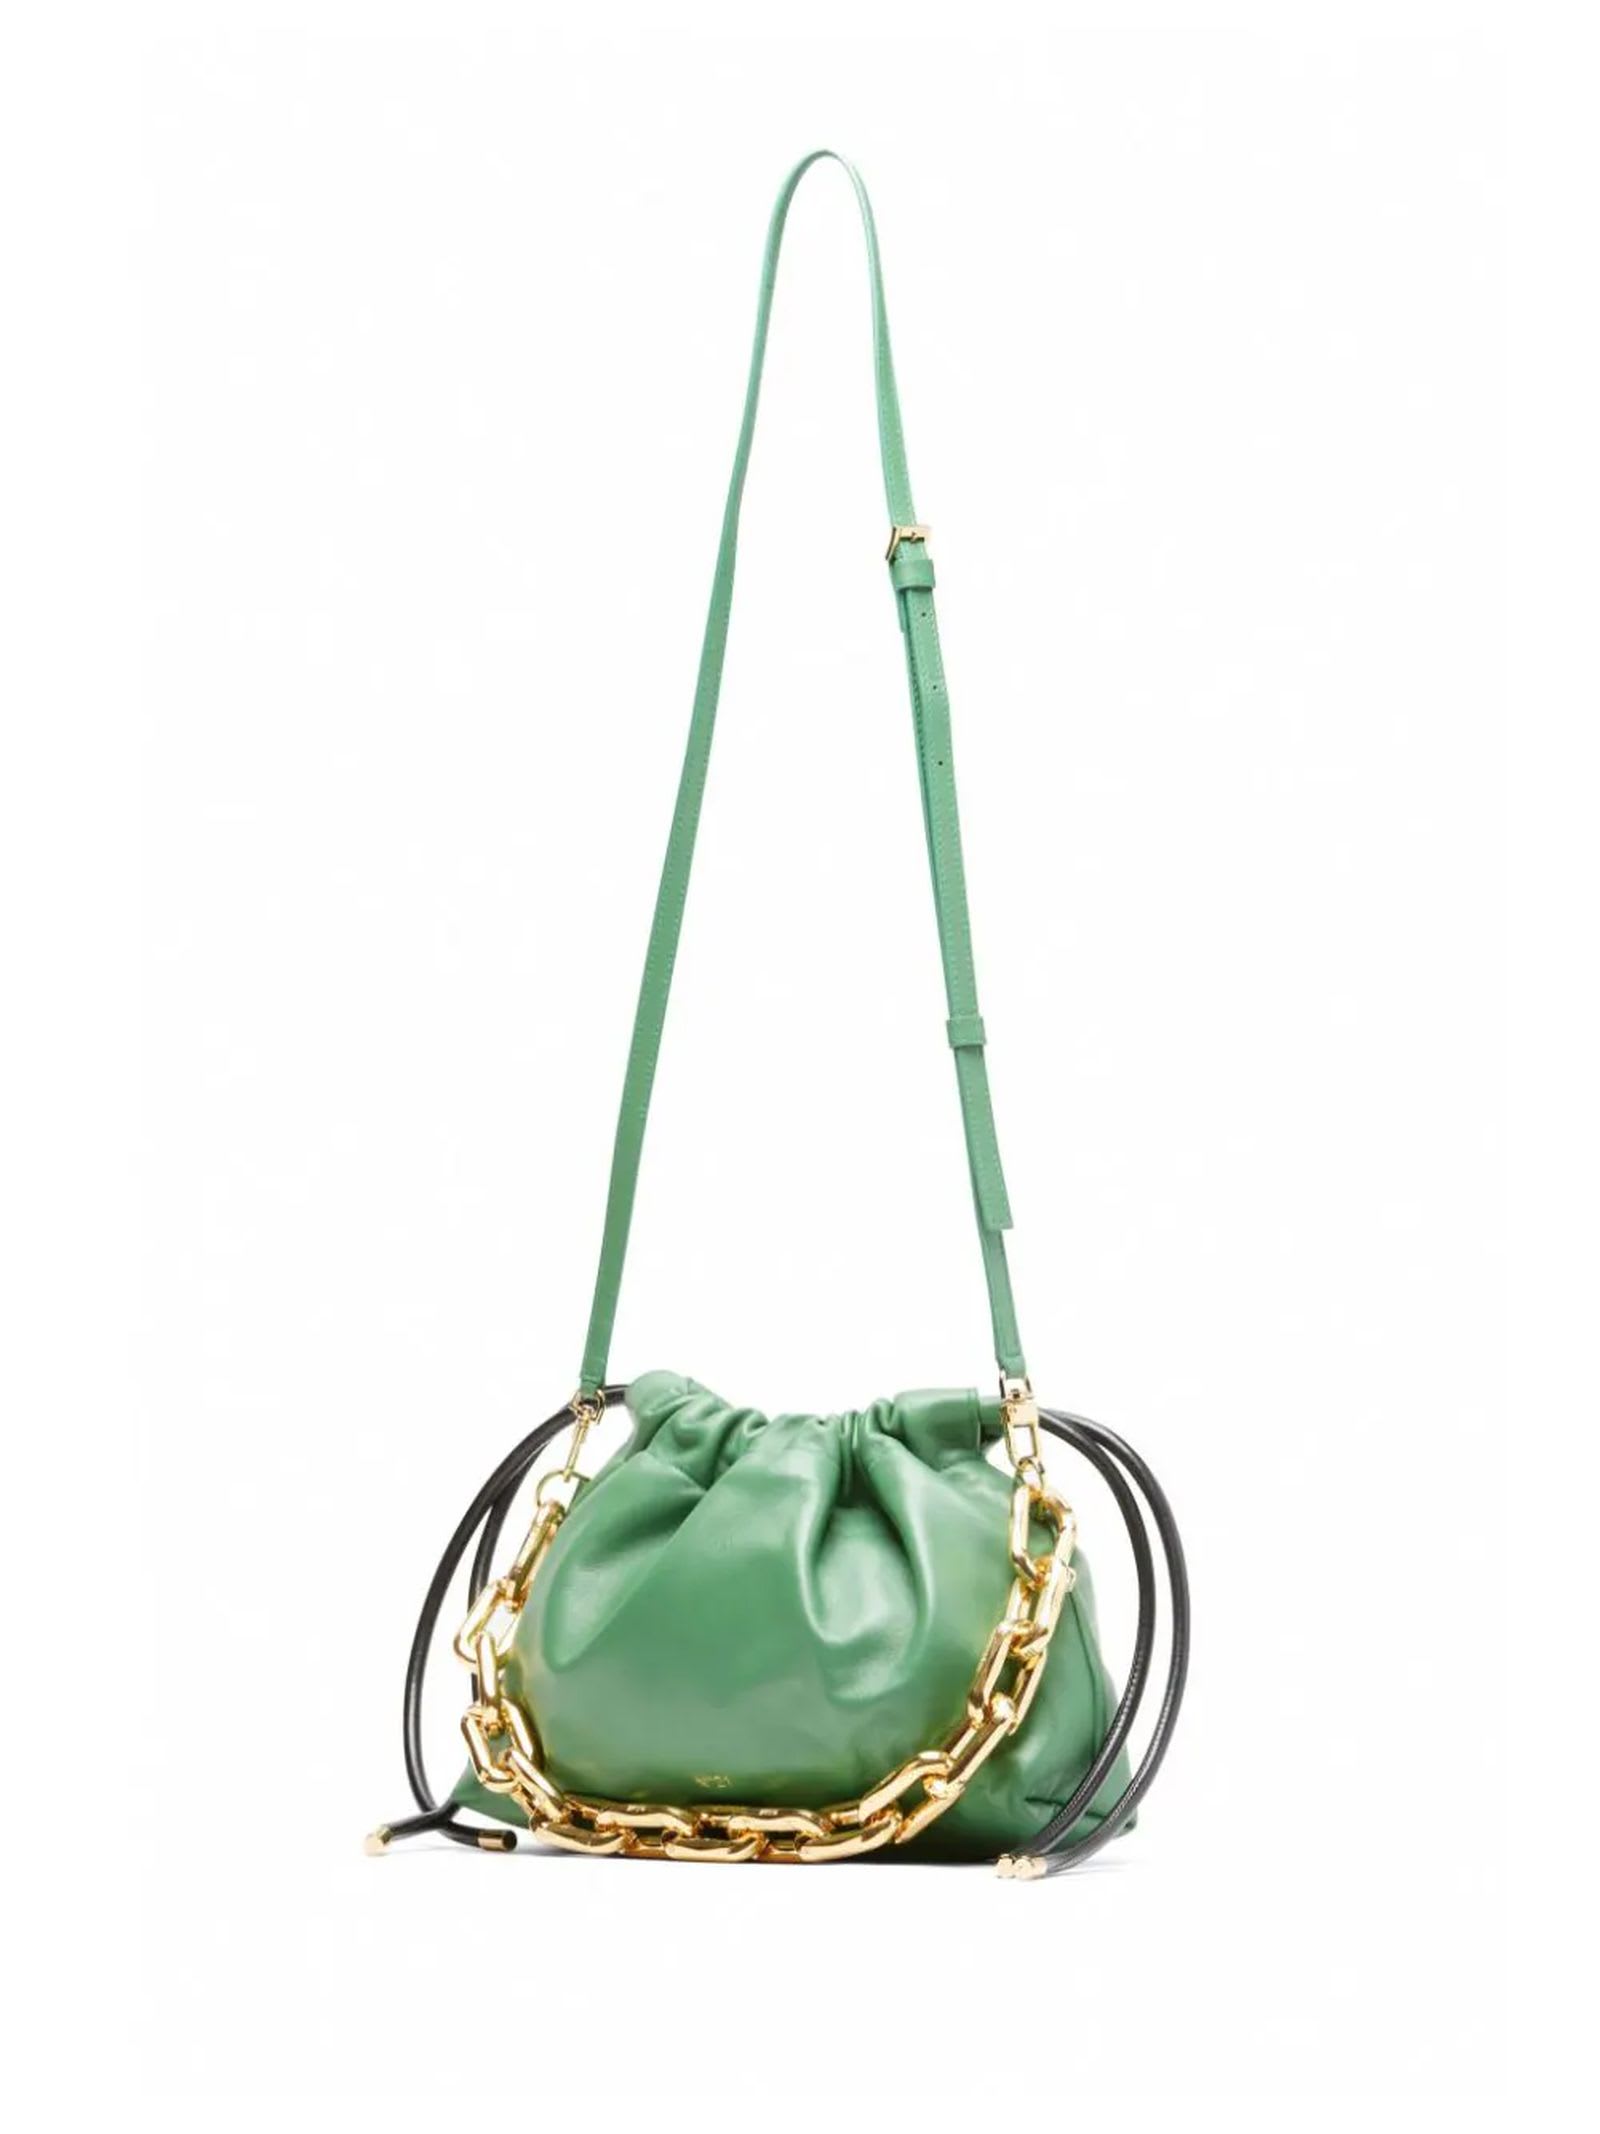 N°21 Eva Leather Crossbody Bag in Green